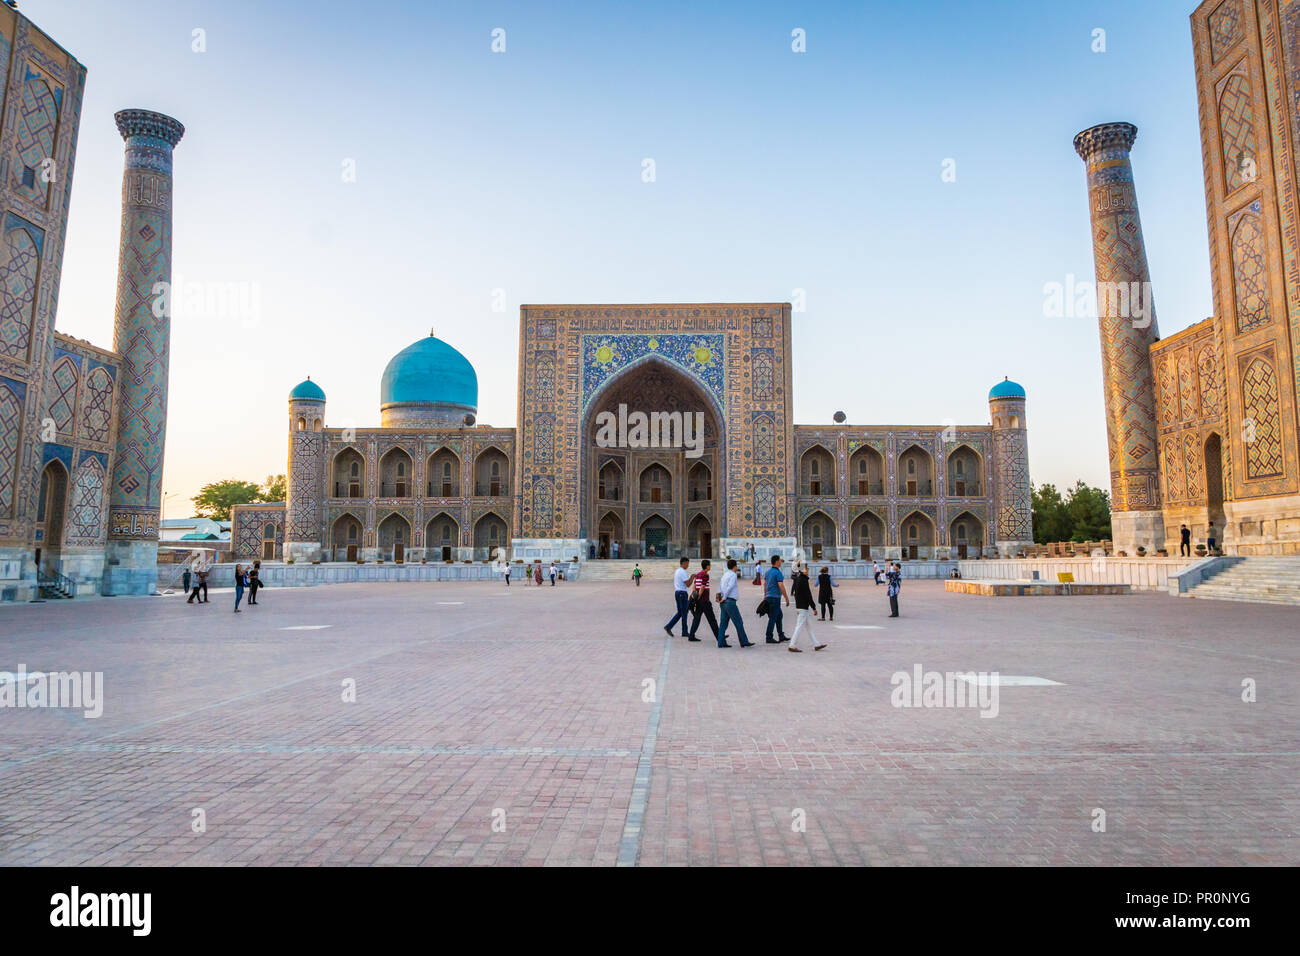 Samarkand, Uzbekistan - September, 2018: The Registan square in Samarkand, Uzbekistan. Registan is famous for its beautiful architecture and colorful Stock Photo